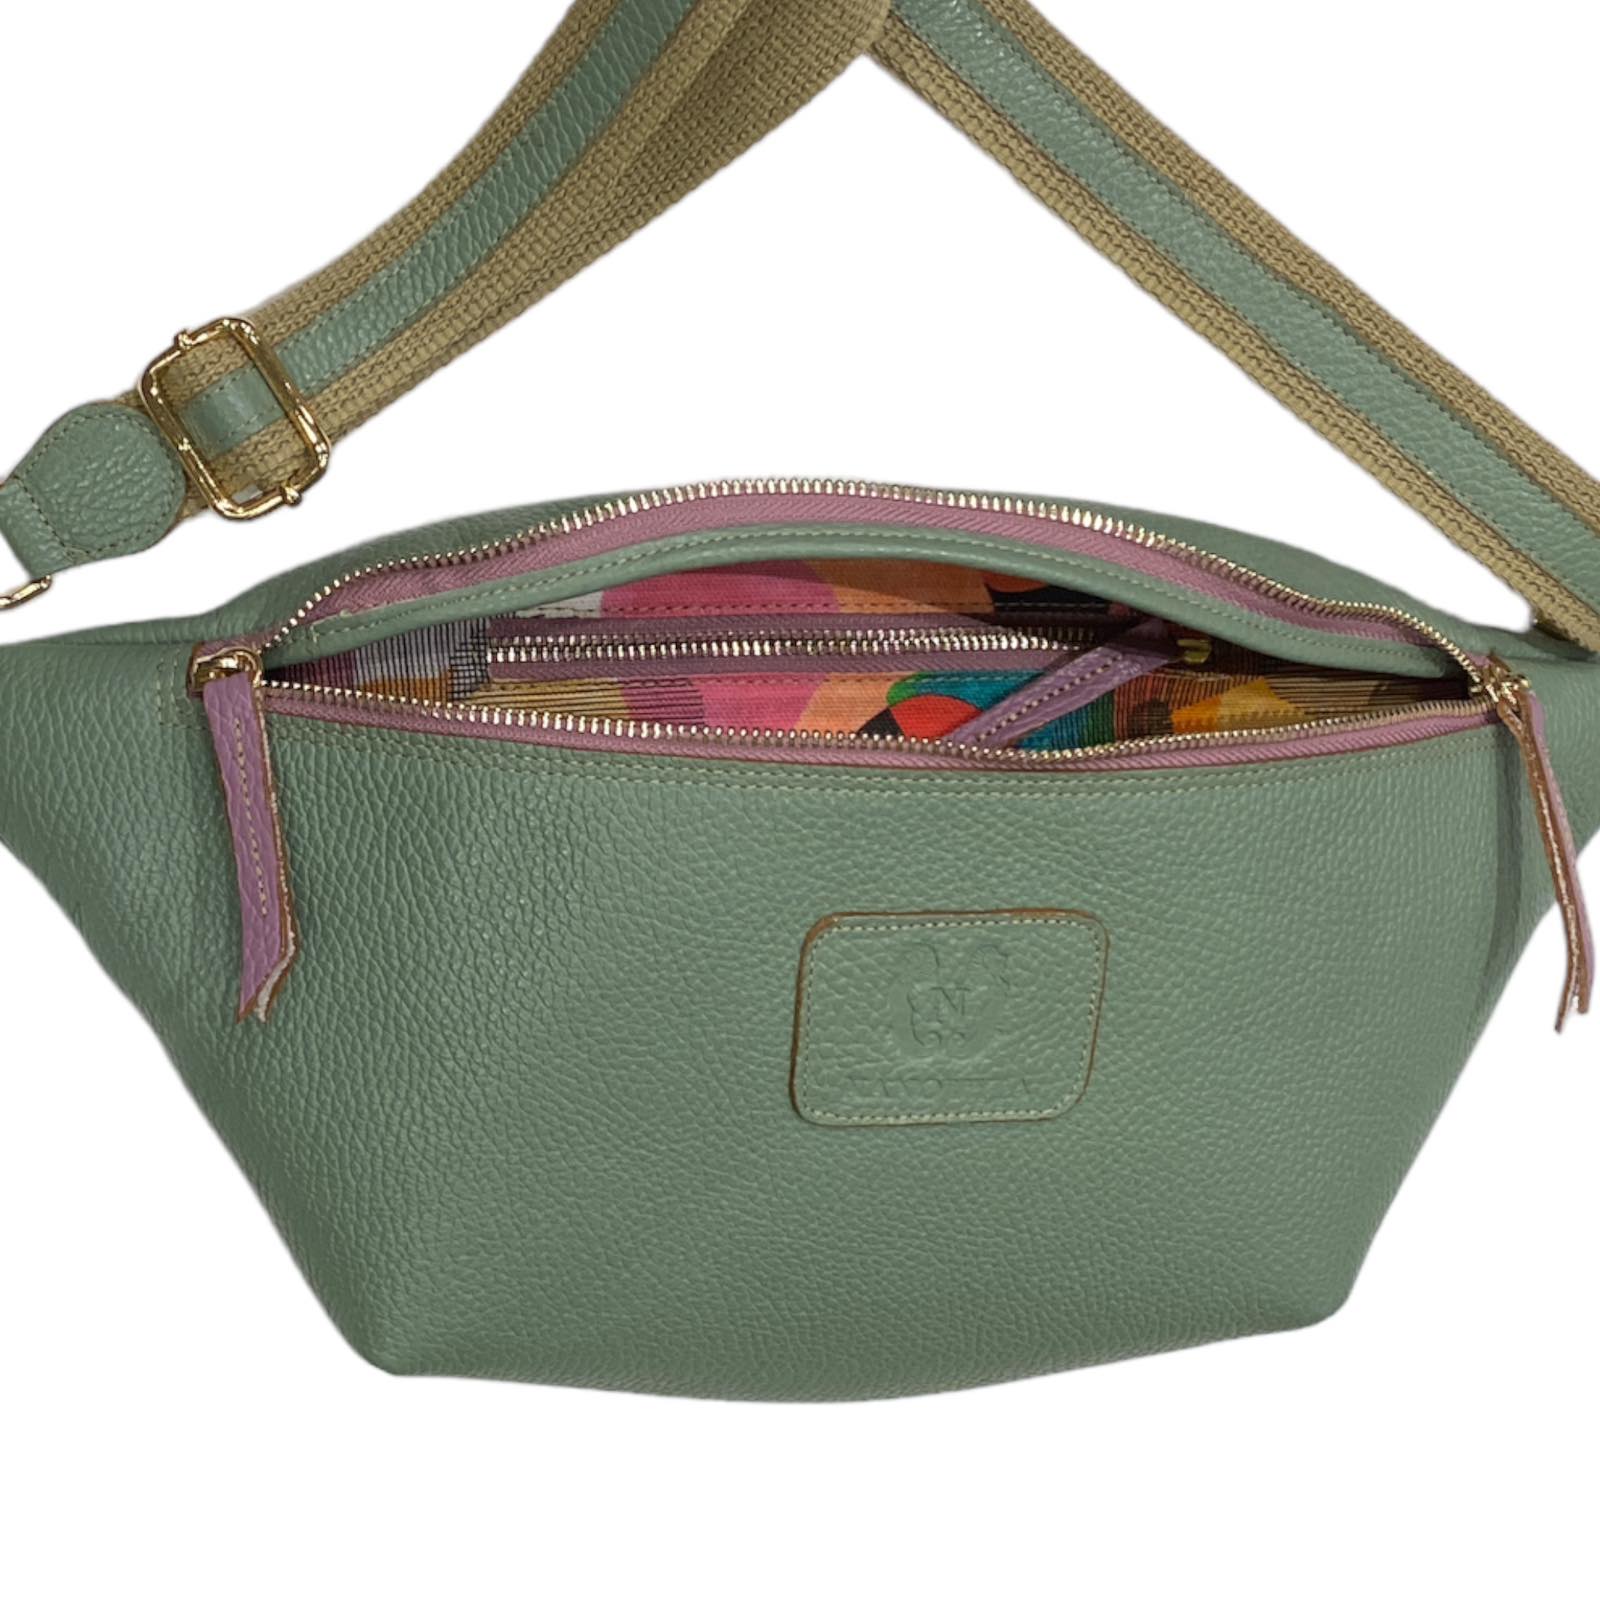 XL sage green leather belt bag with lilac details